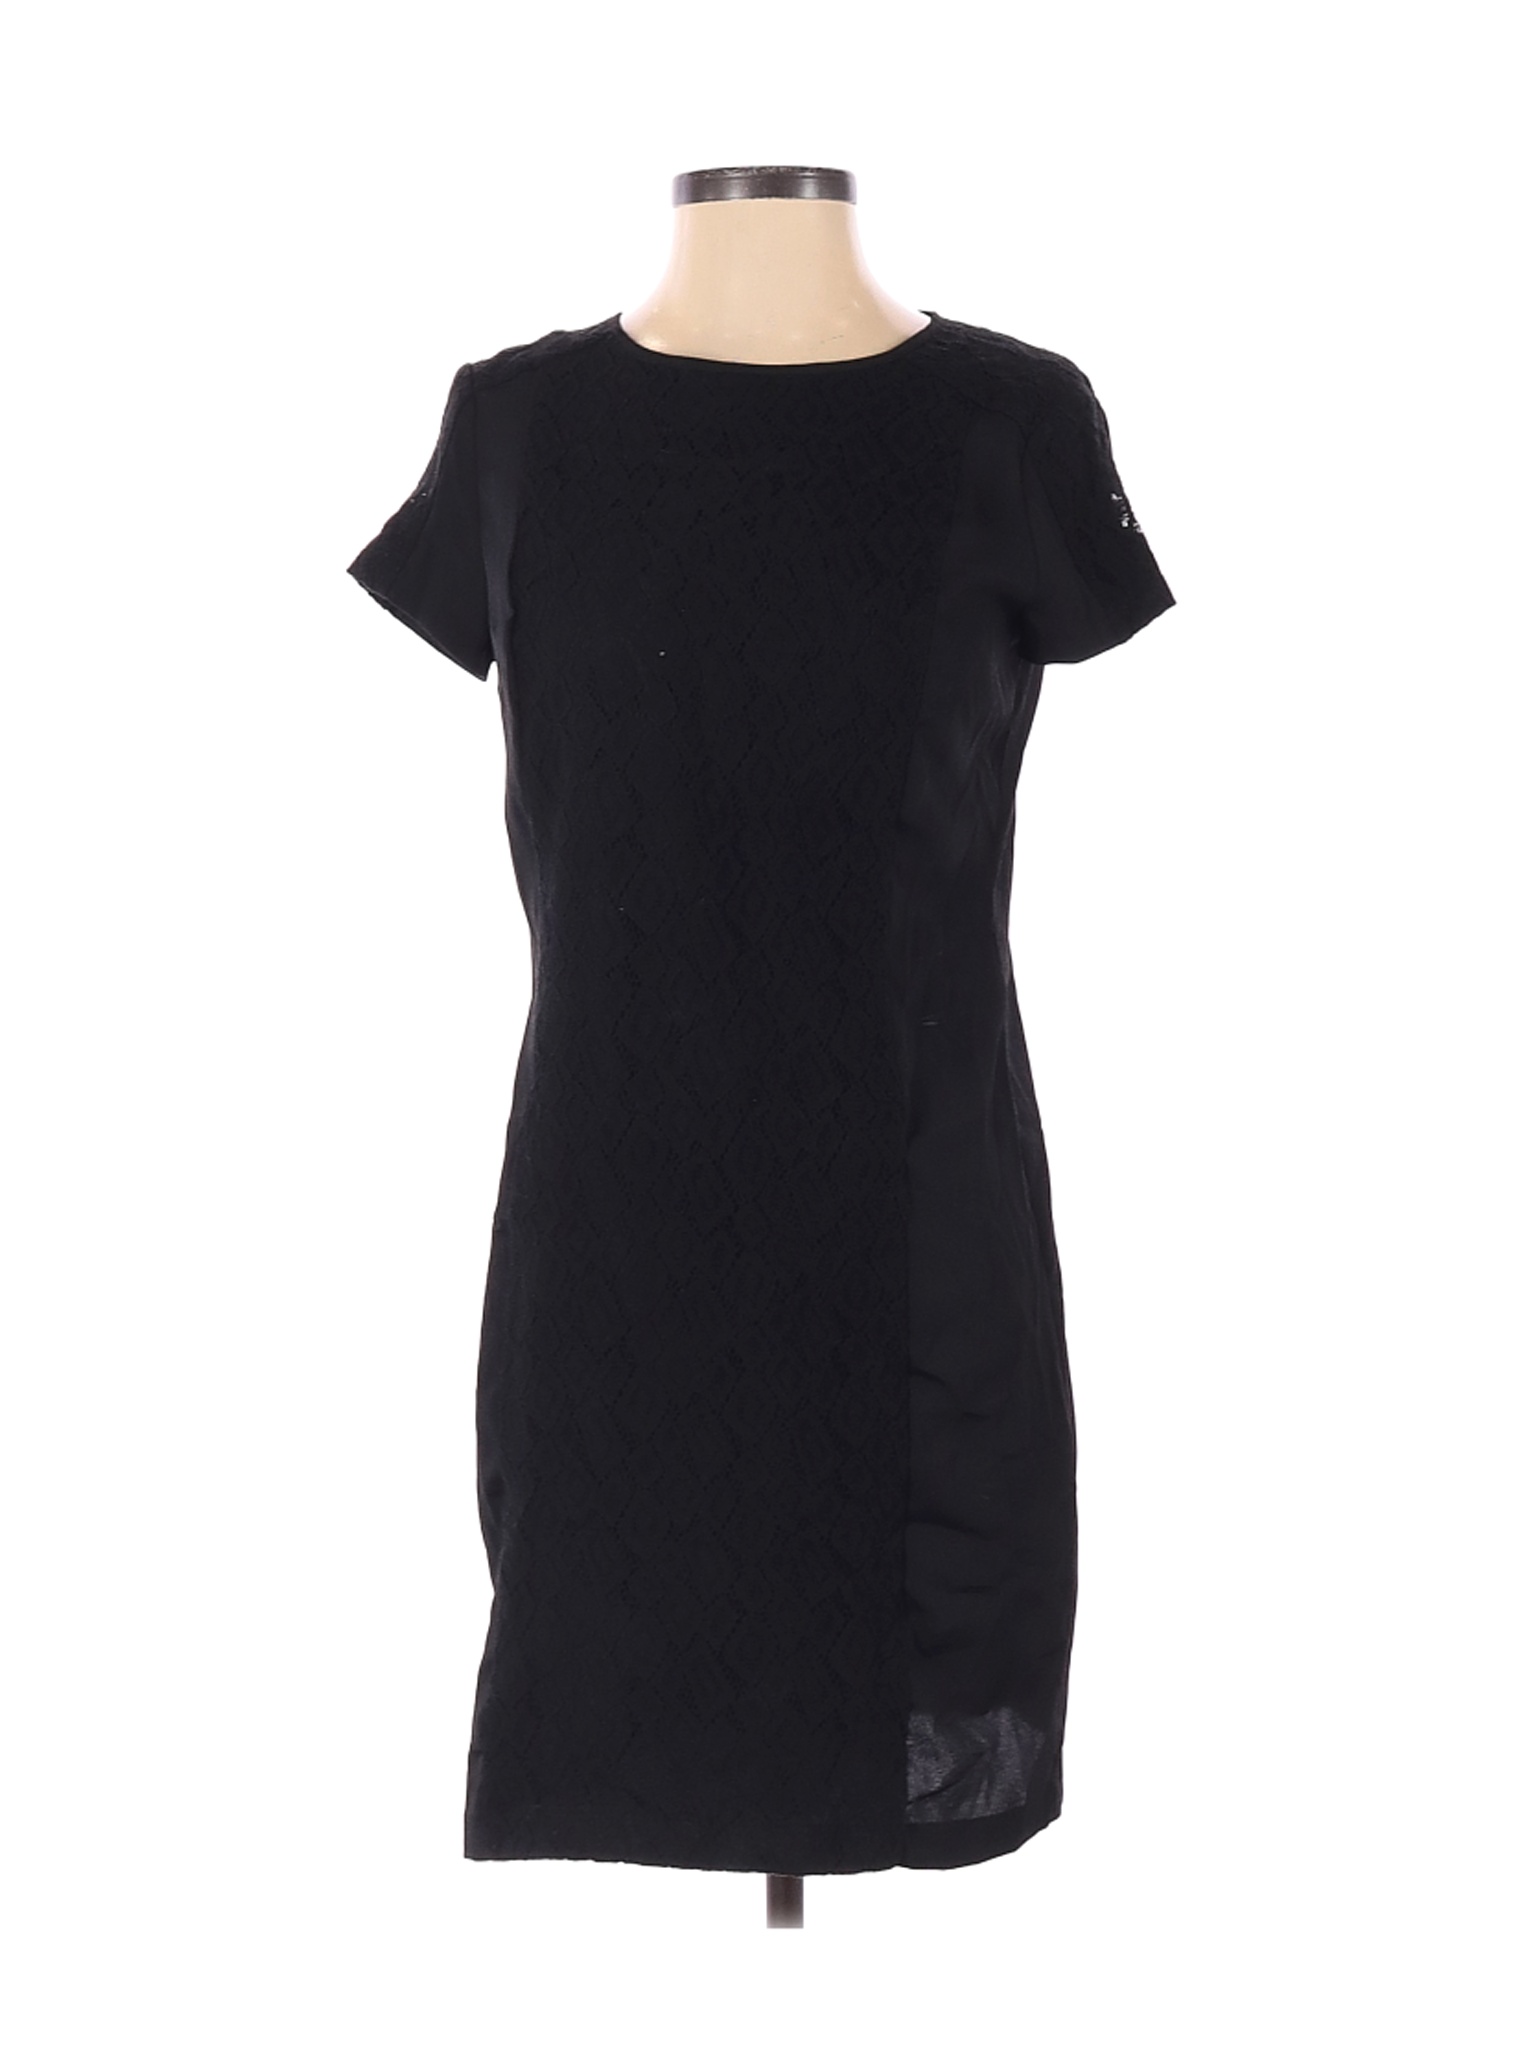 Apt. 9 Women Black Cocktail Dress XS | eBay